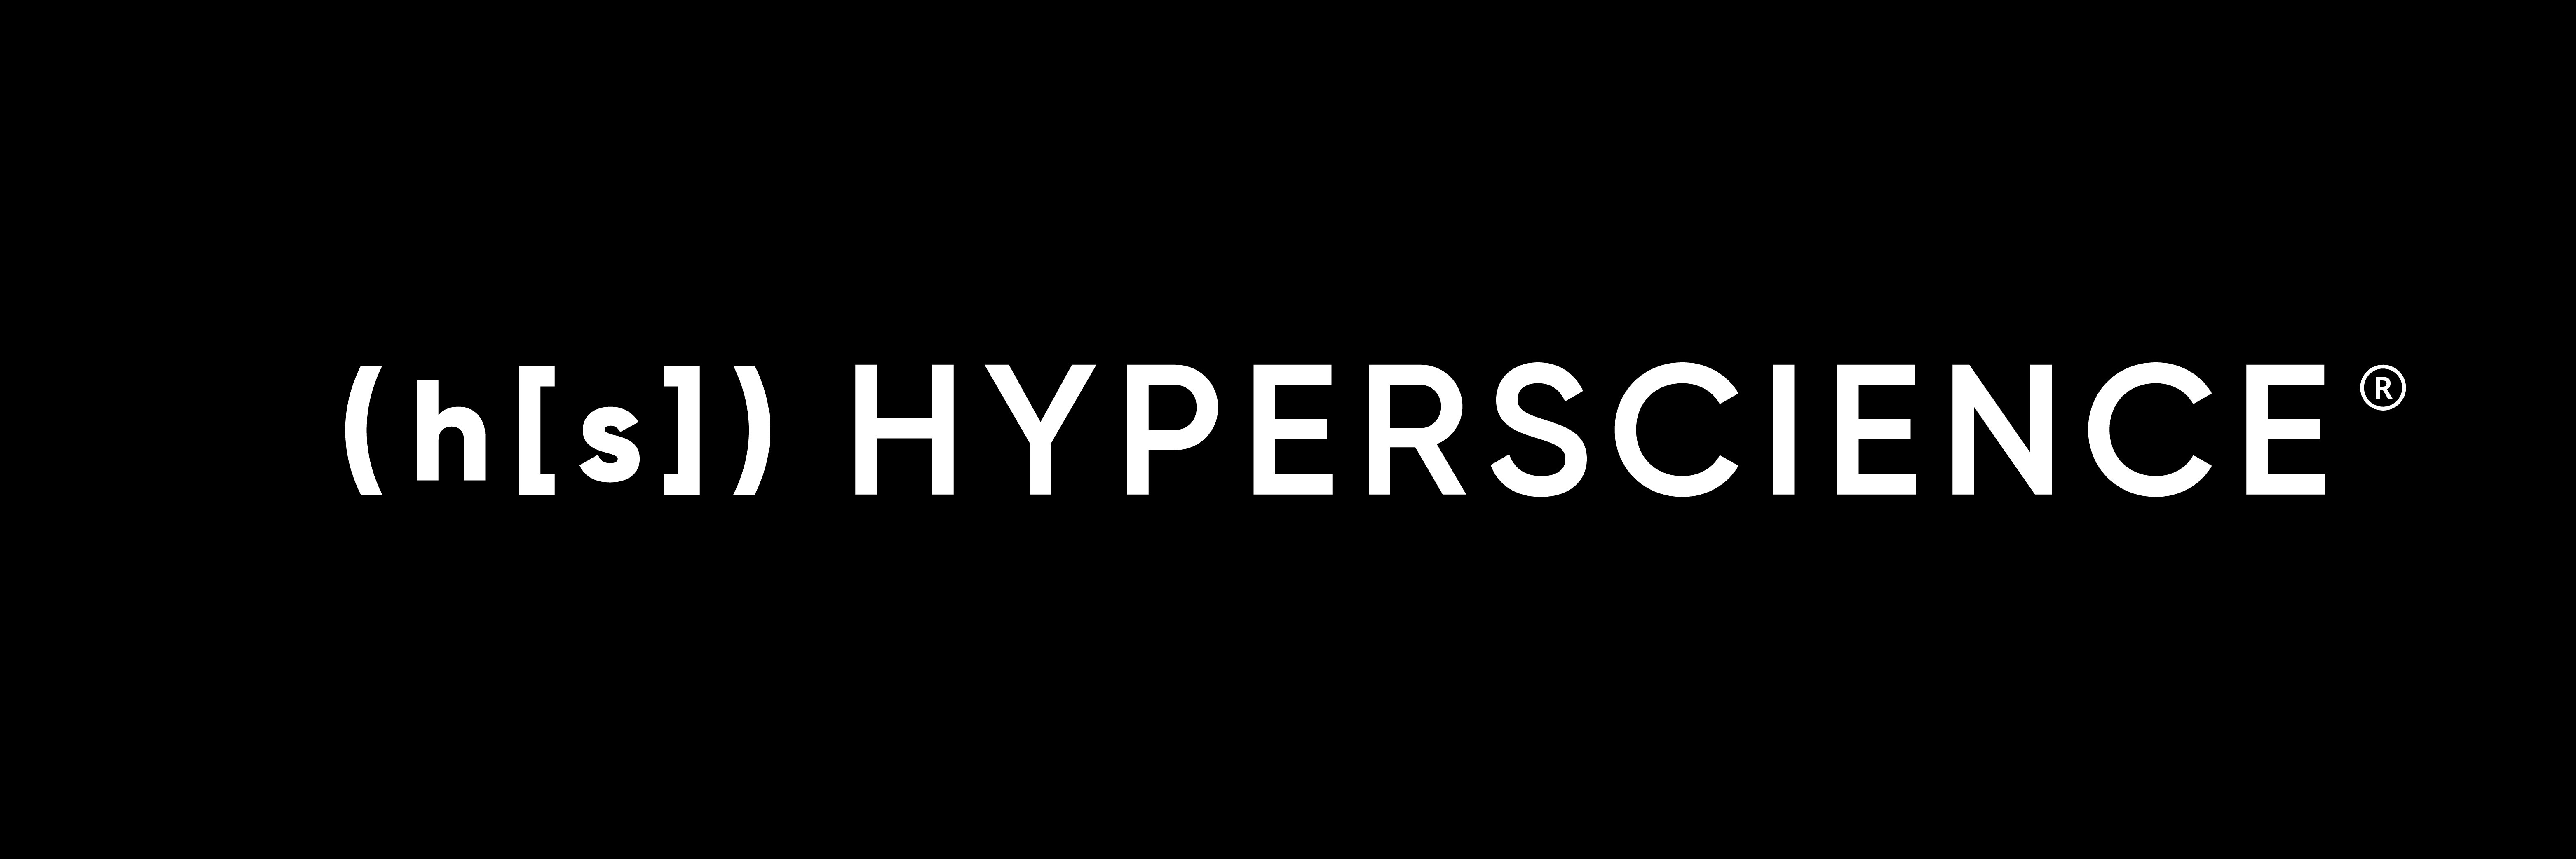 hyperscience_logo